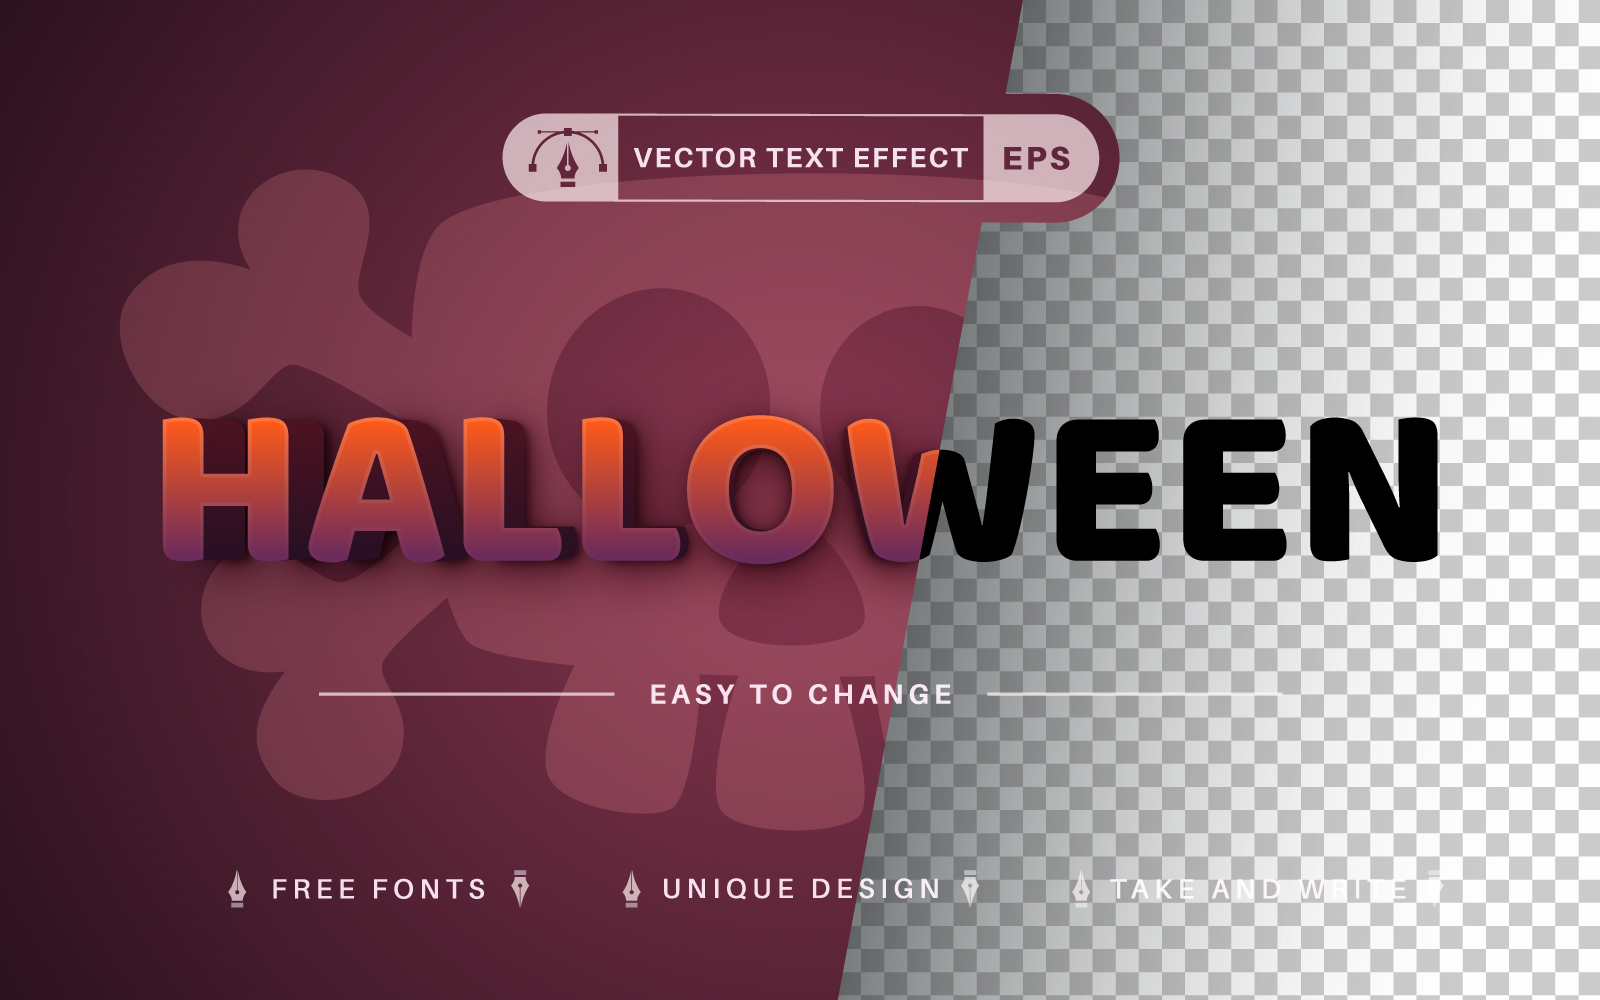 Halloween - Editable Text Effect, Font Style